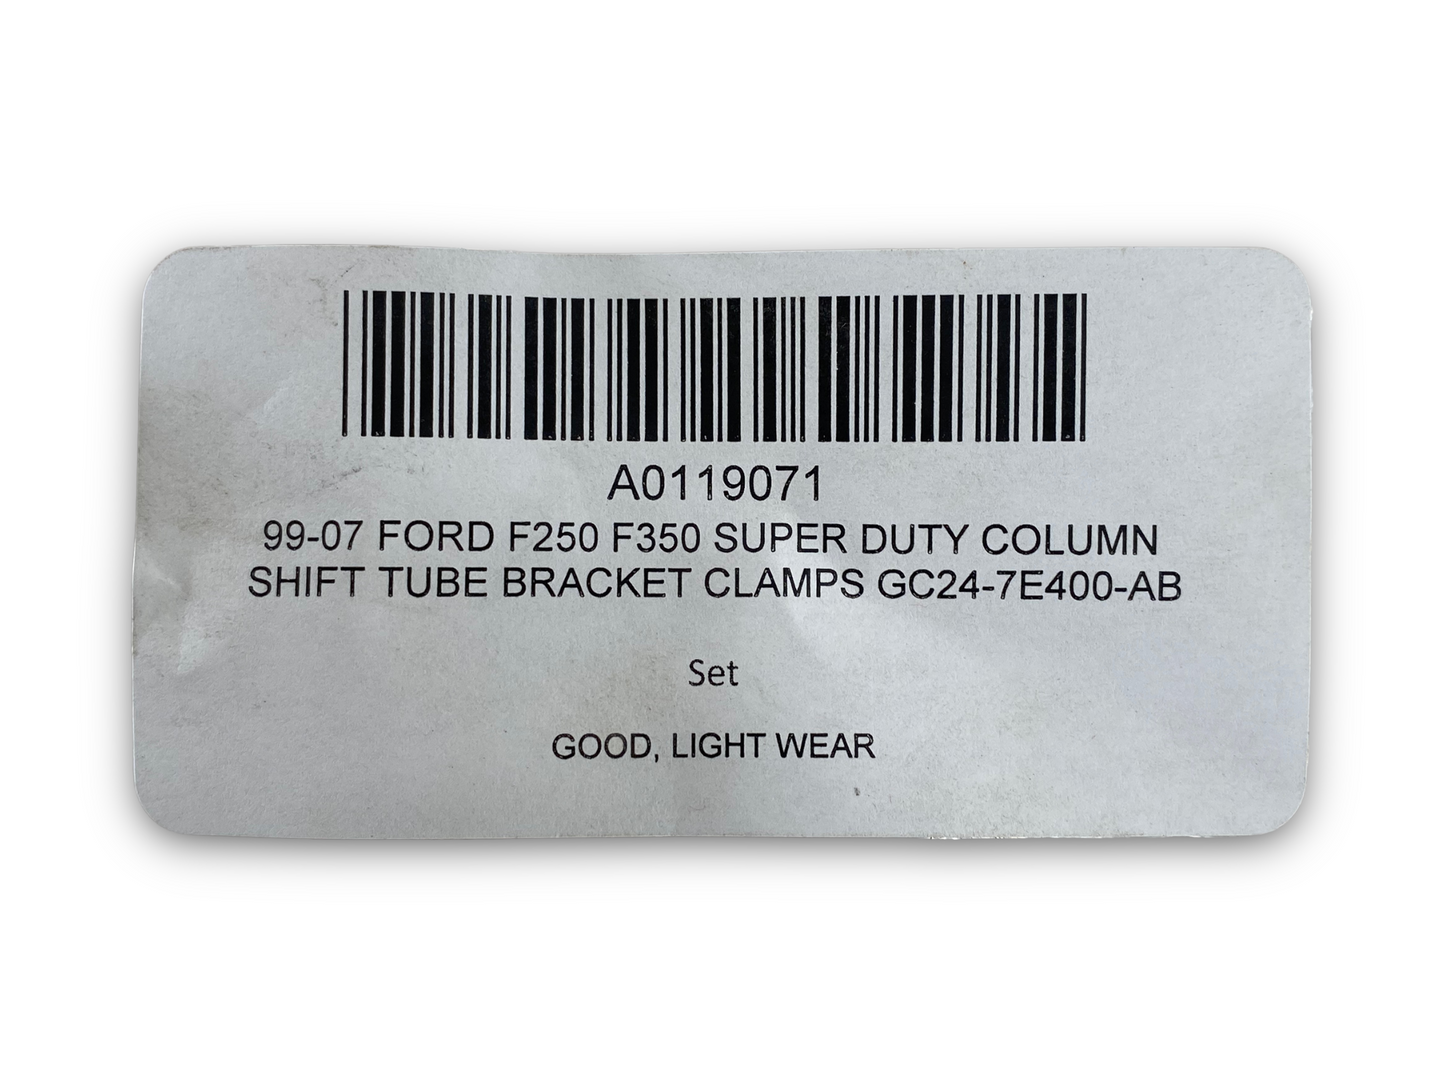 99-07 Ford F250 F350 Super Duty Column Shift Tube Bracket Clamps GC24-7E400-AB